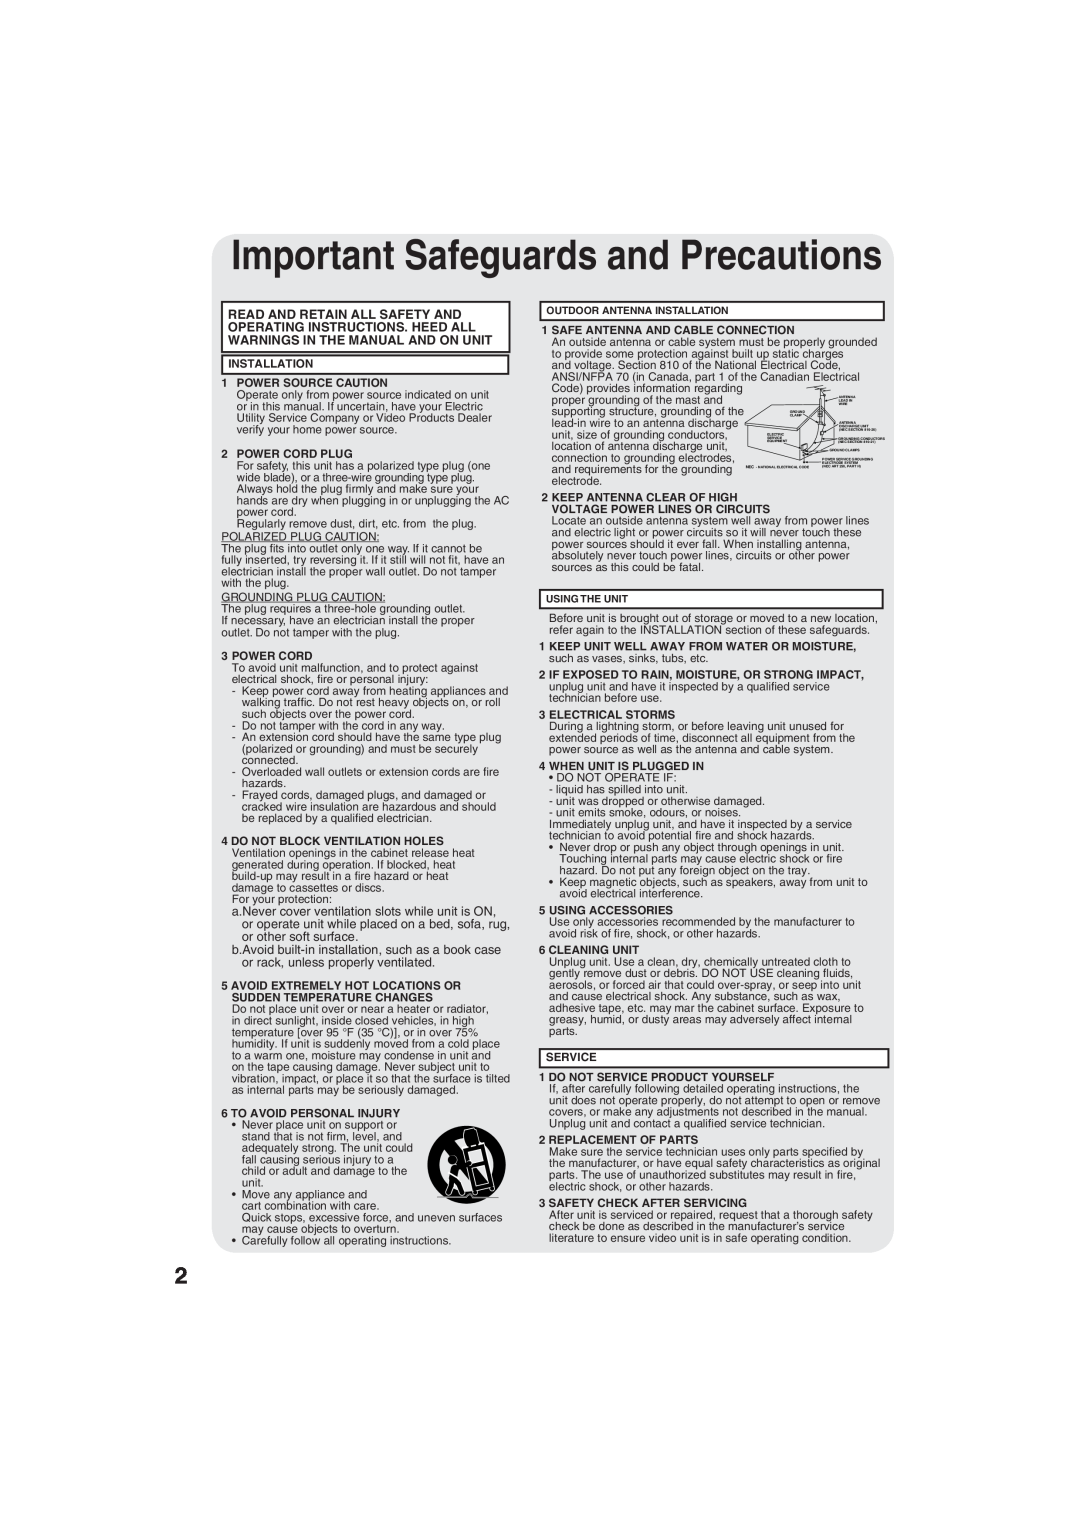 Panasonic PV-DF203, PV-DF273 manual Important Safeguards and Precautions 